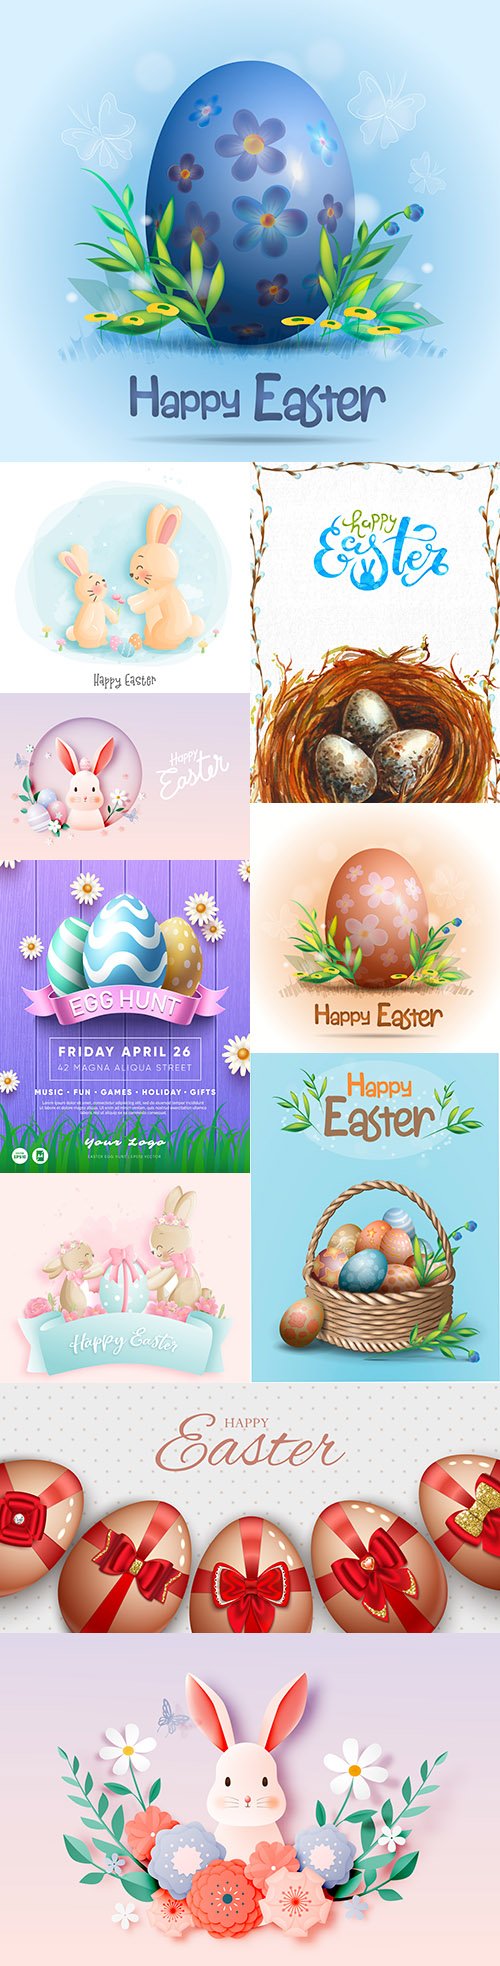 Happy Easter decorative egg design bants and ribbon